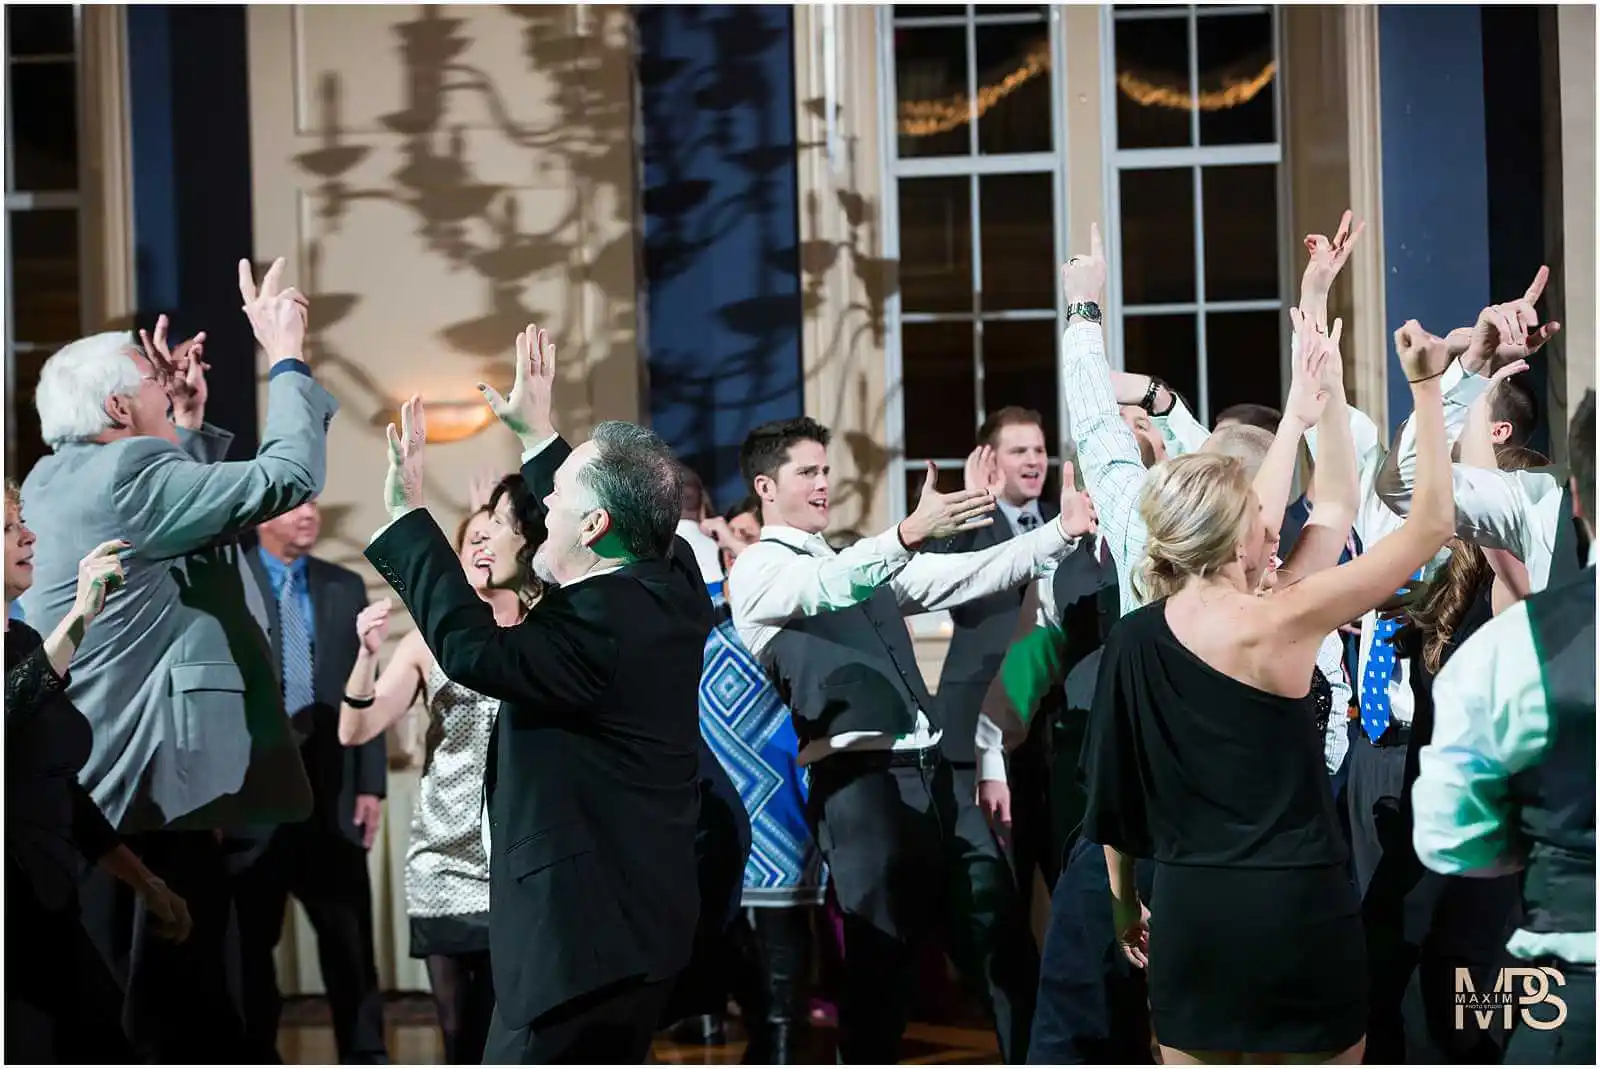 Joyful guests dancing at an evening celebration event at the Grand Ballroom